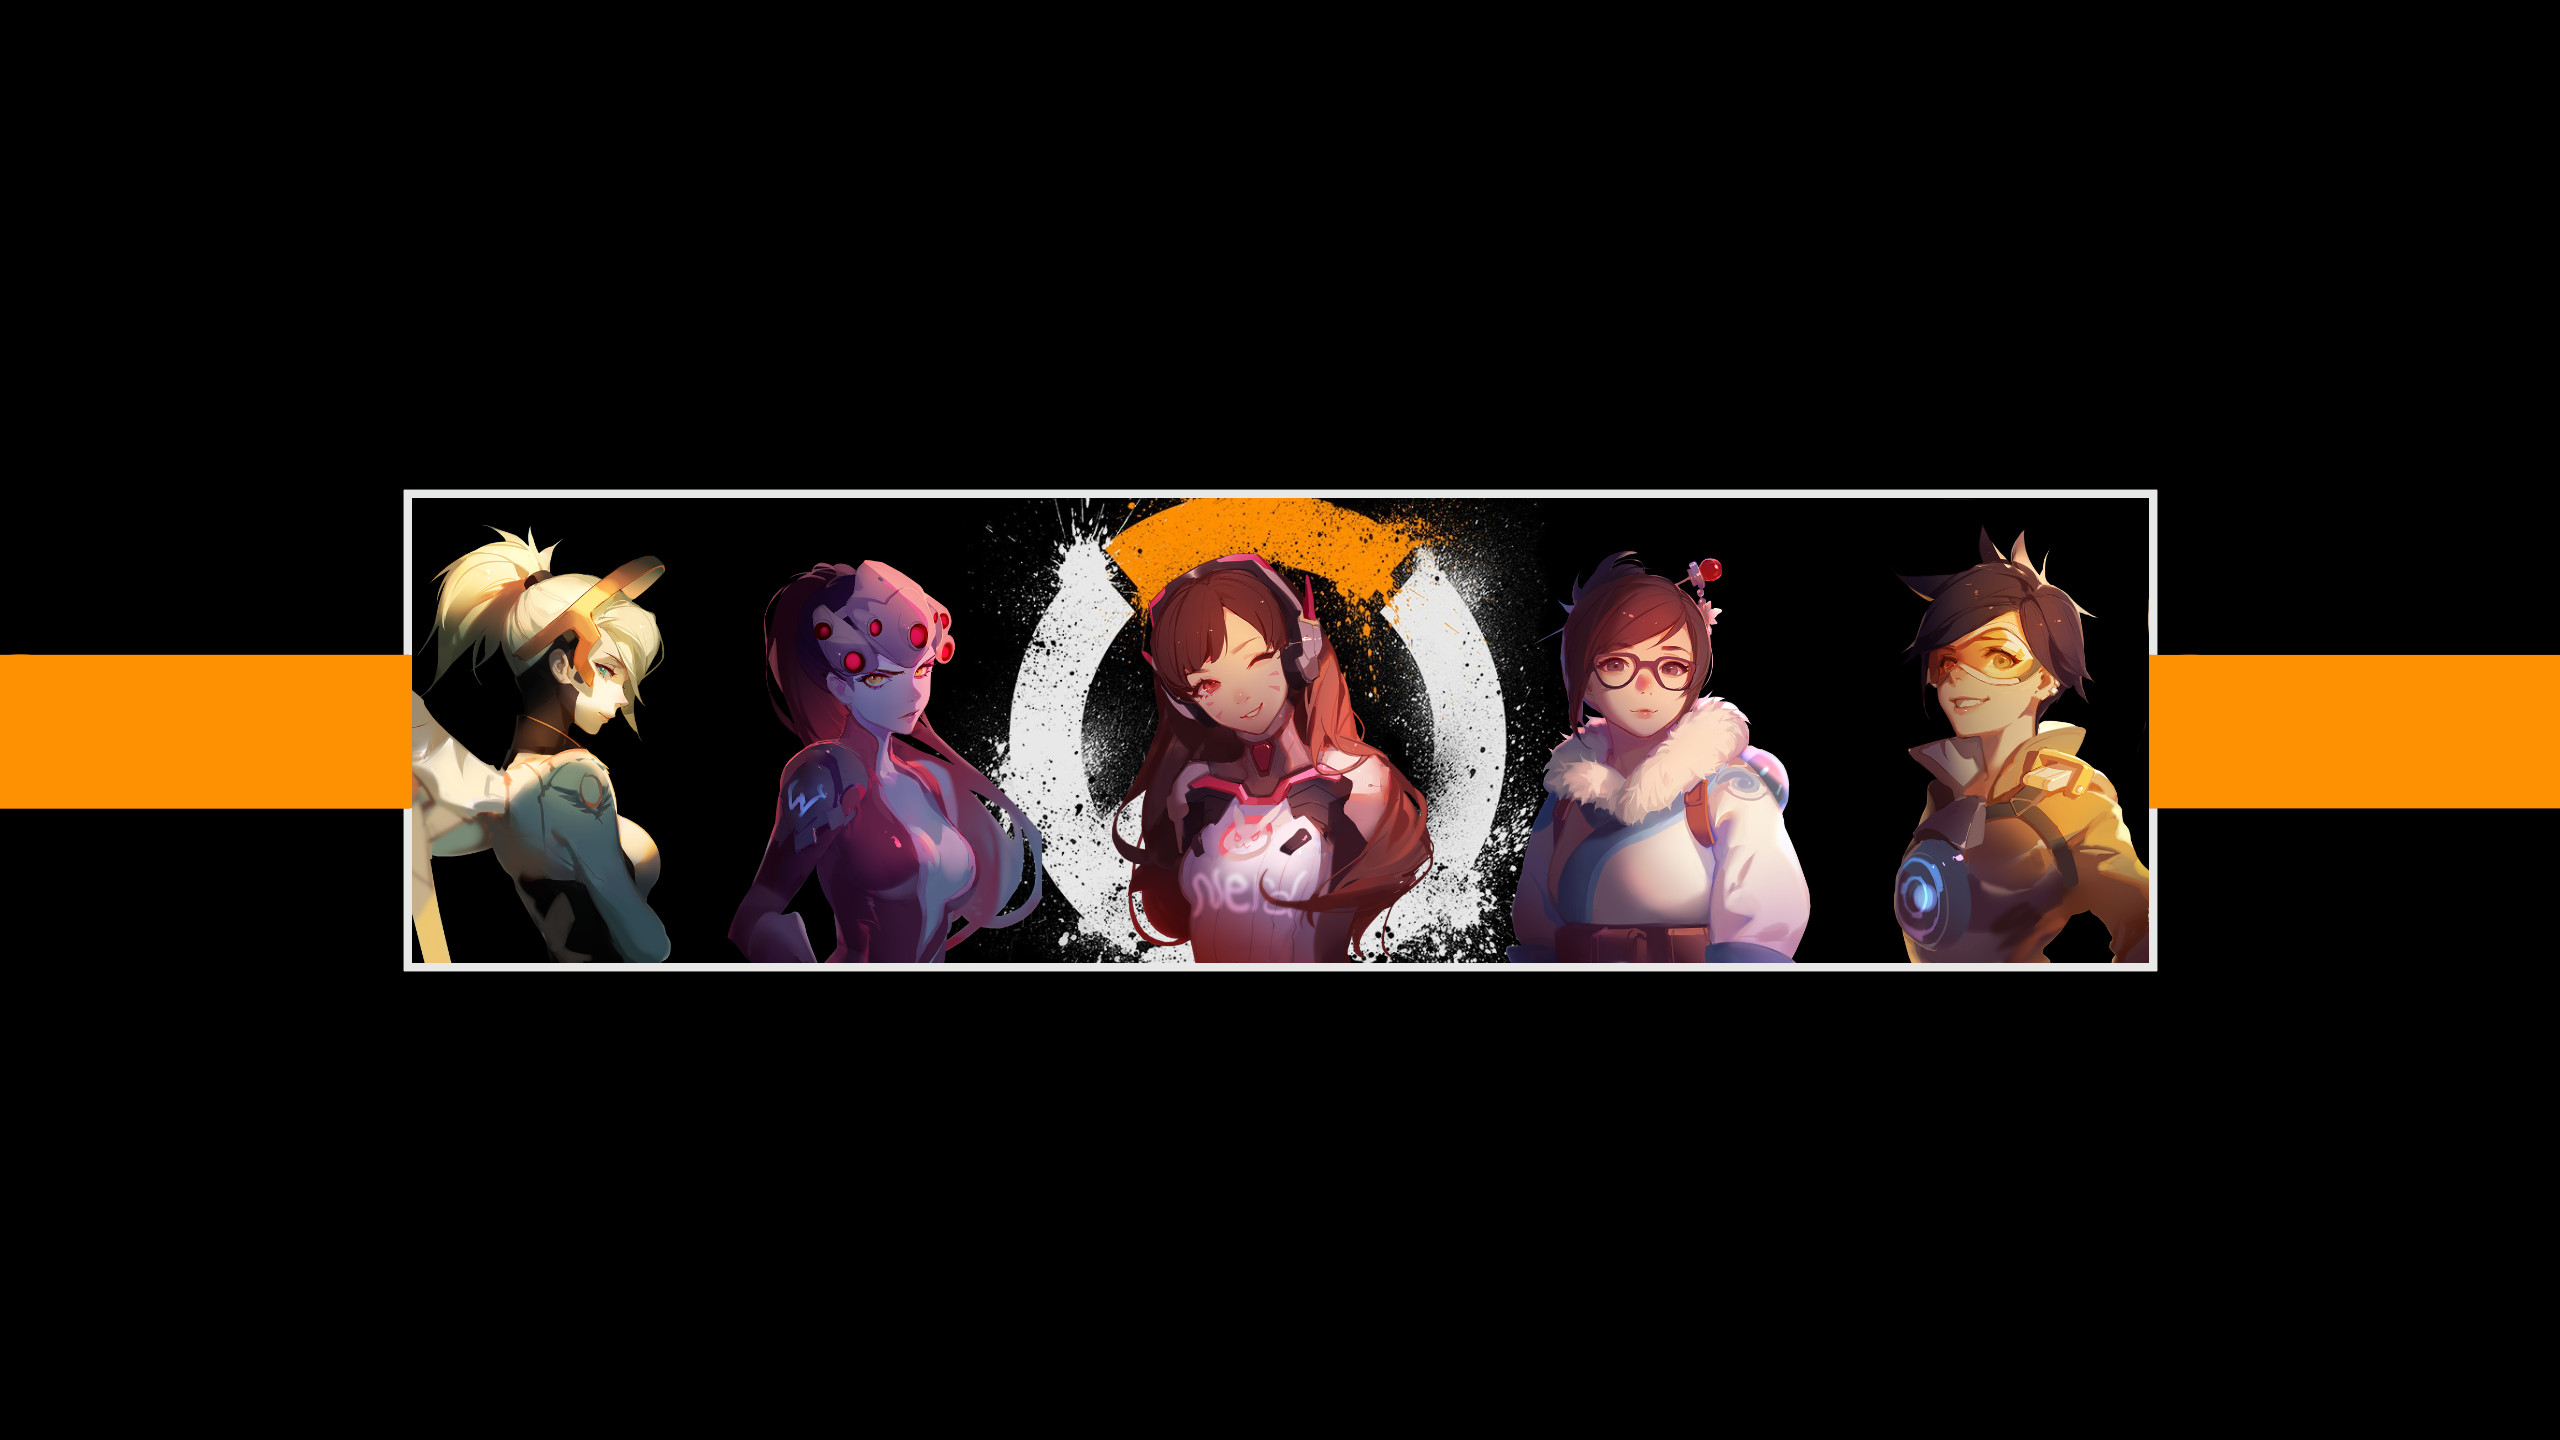 2560x1440 ... Overwatch Girl Heroes Desktop Wallpaper - Nerd by Lowkey-Nerd